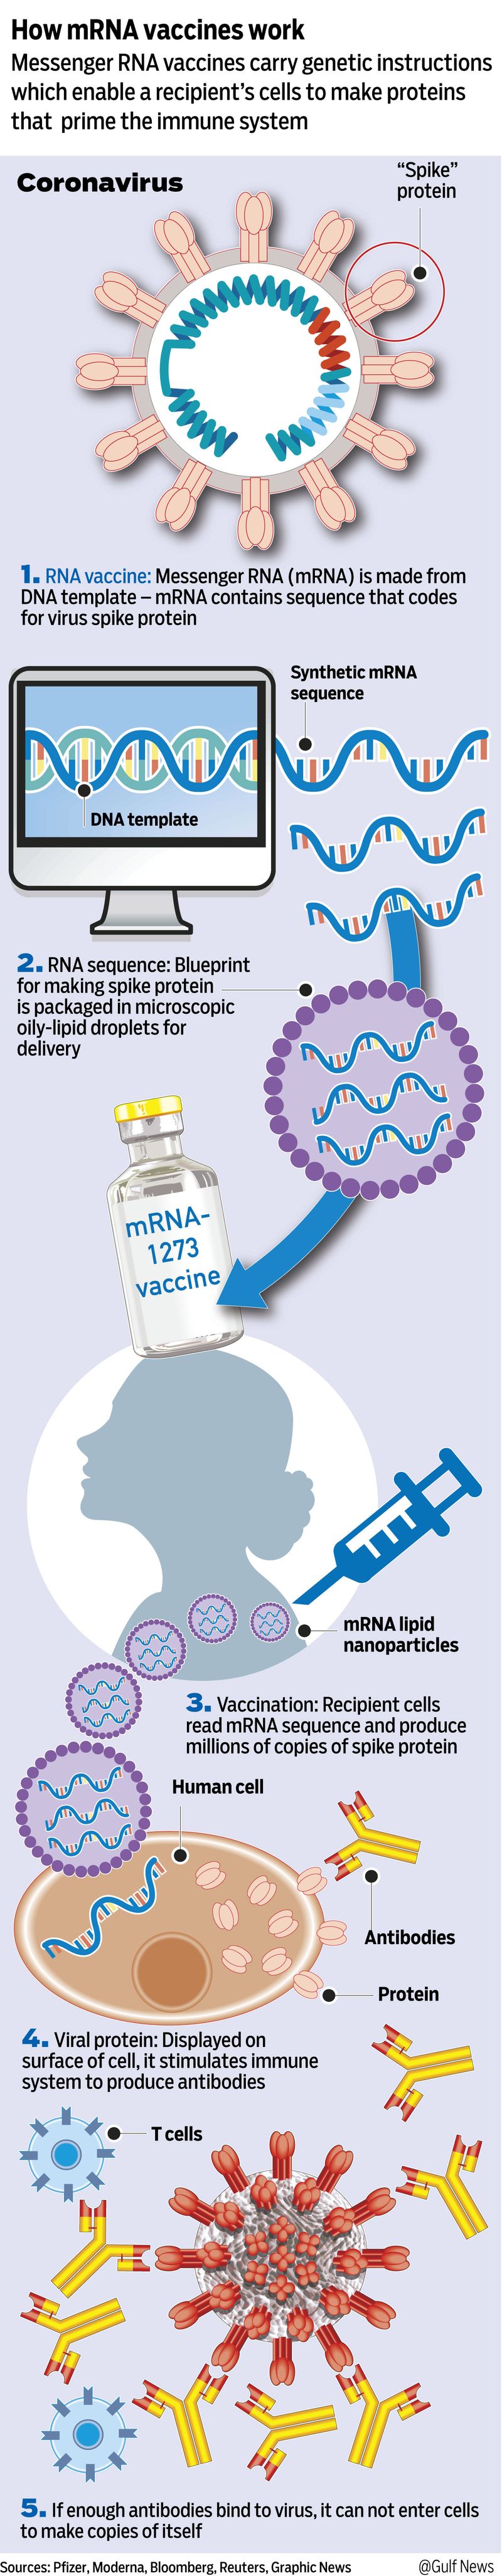 How mRNA vaccines work